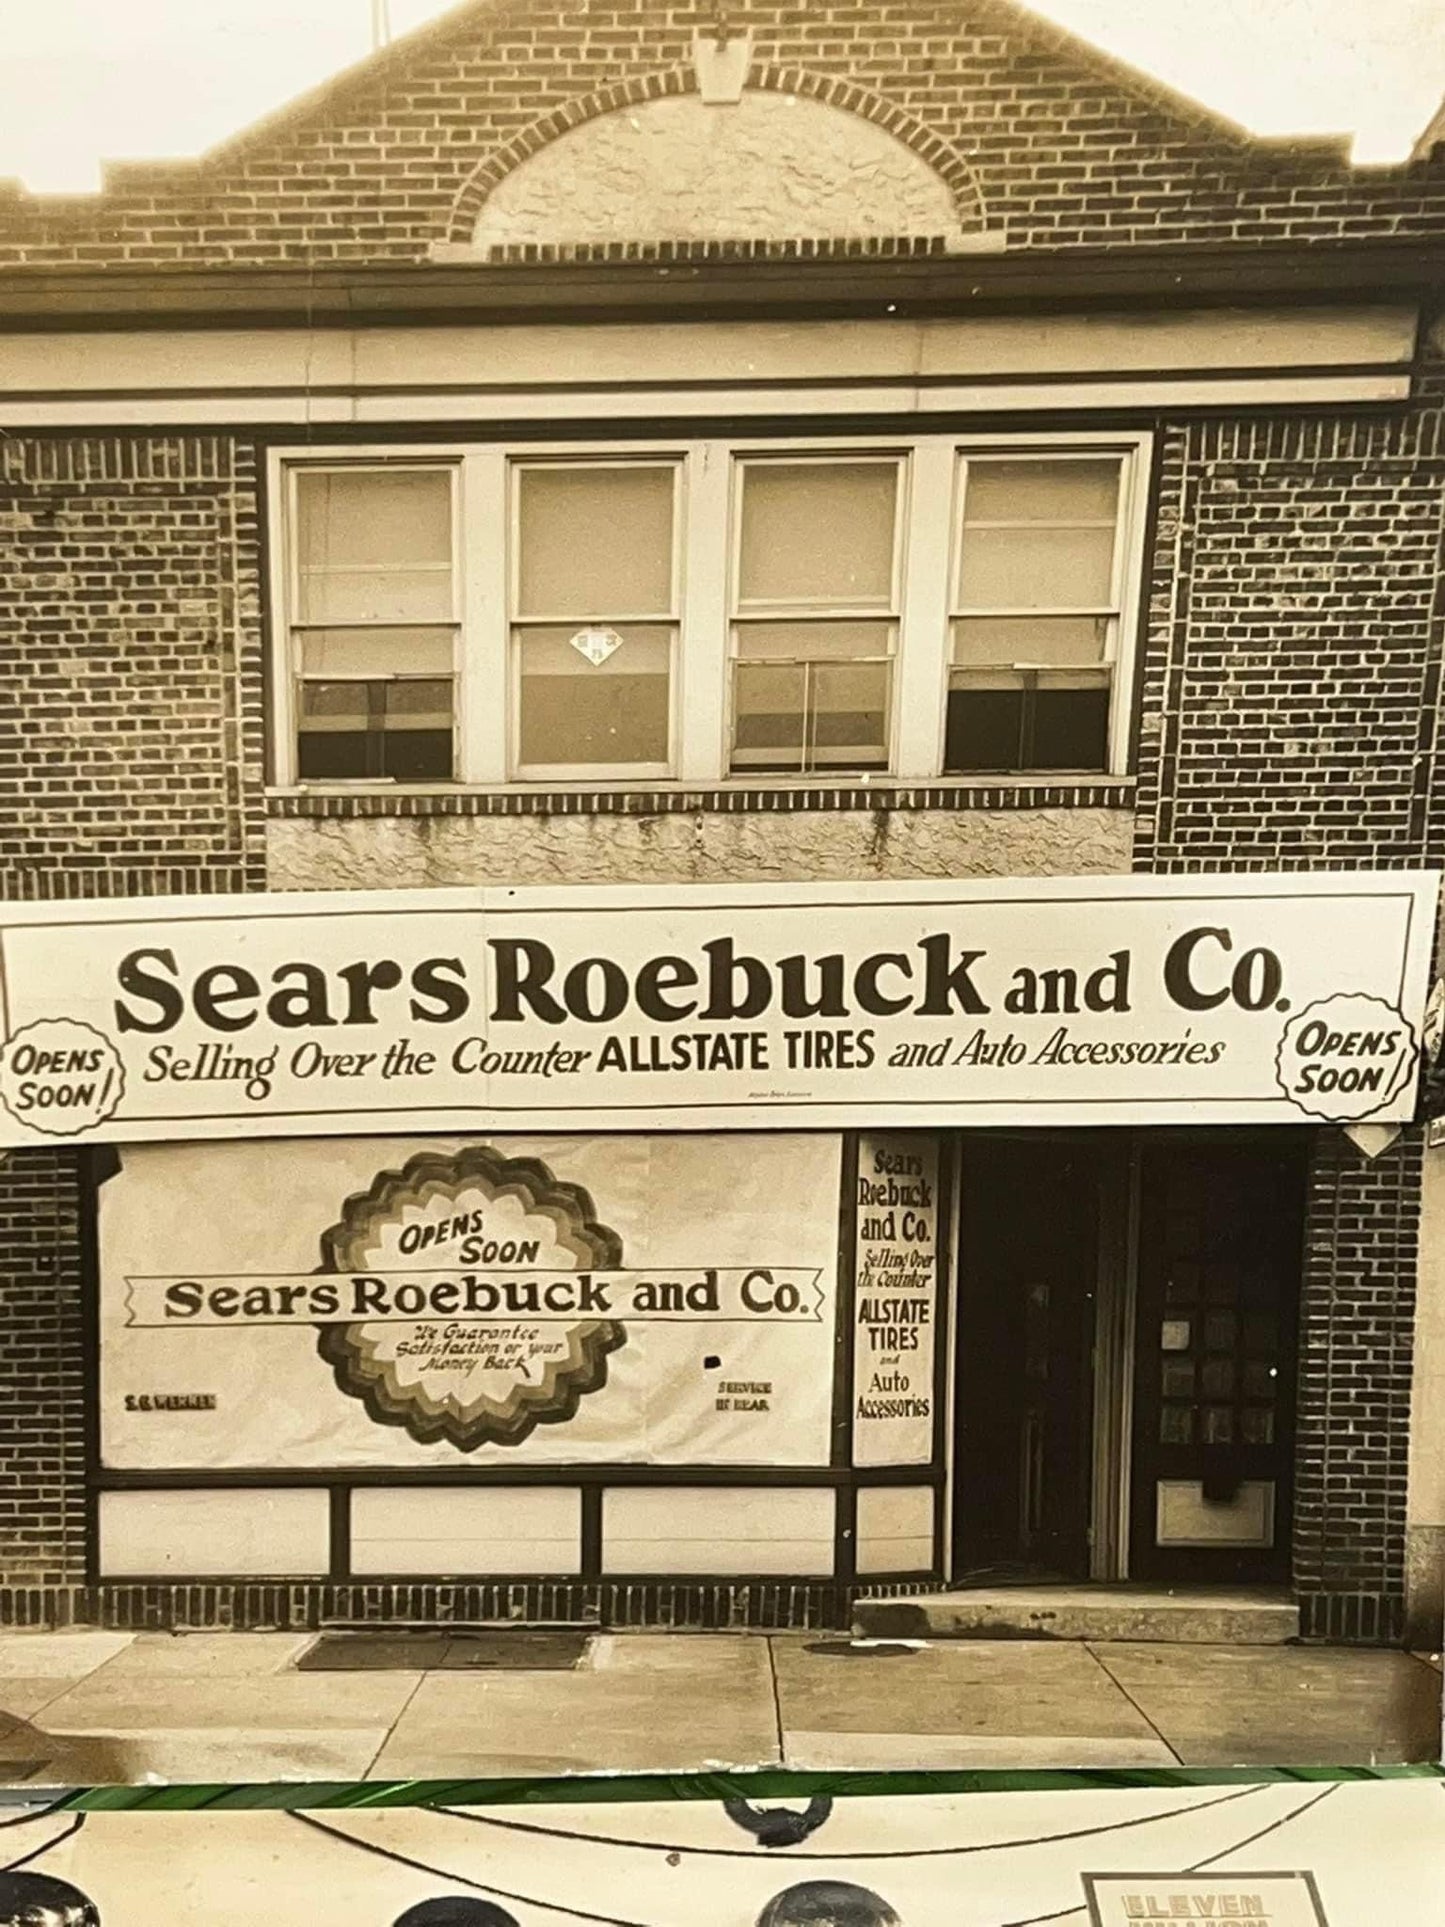 Antique Art Deco era 2 occupational Sears & roebuck building and contents display Philadelphia